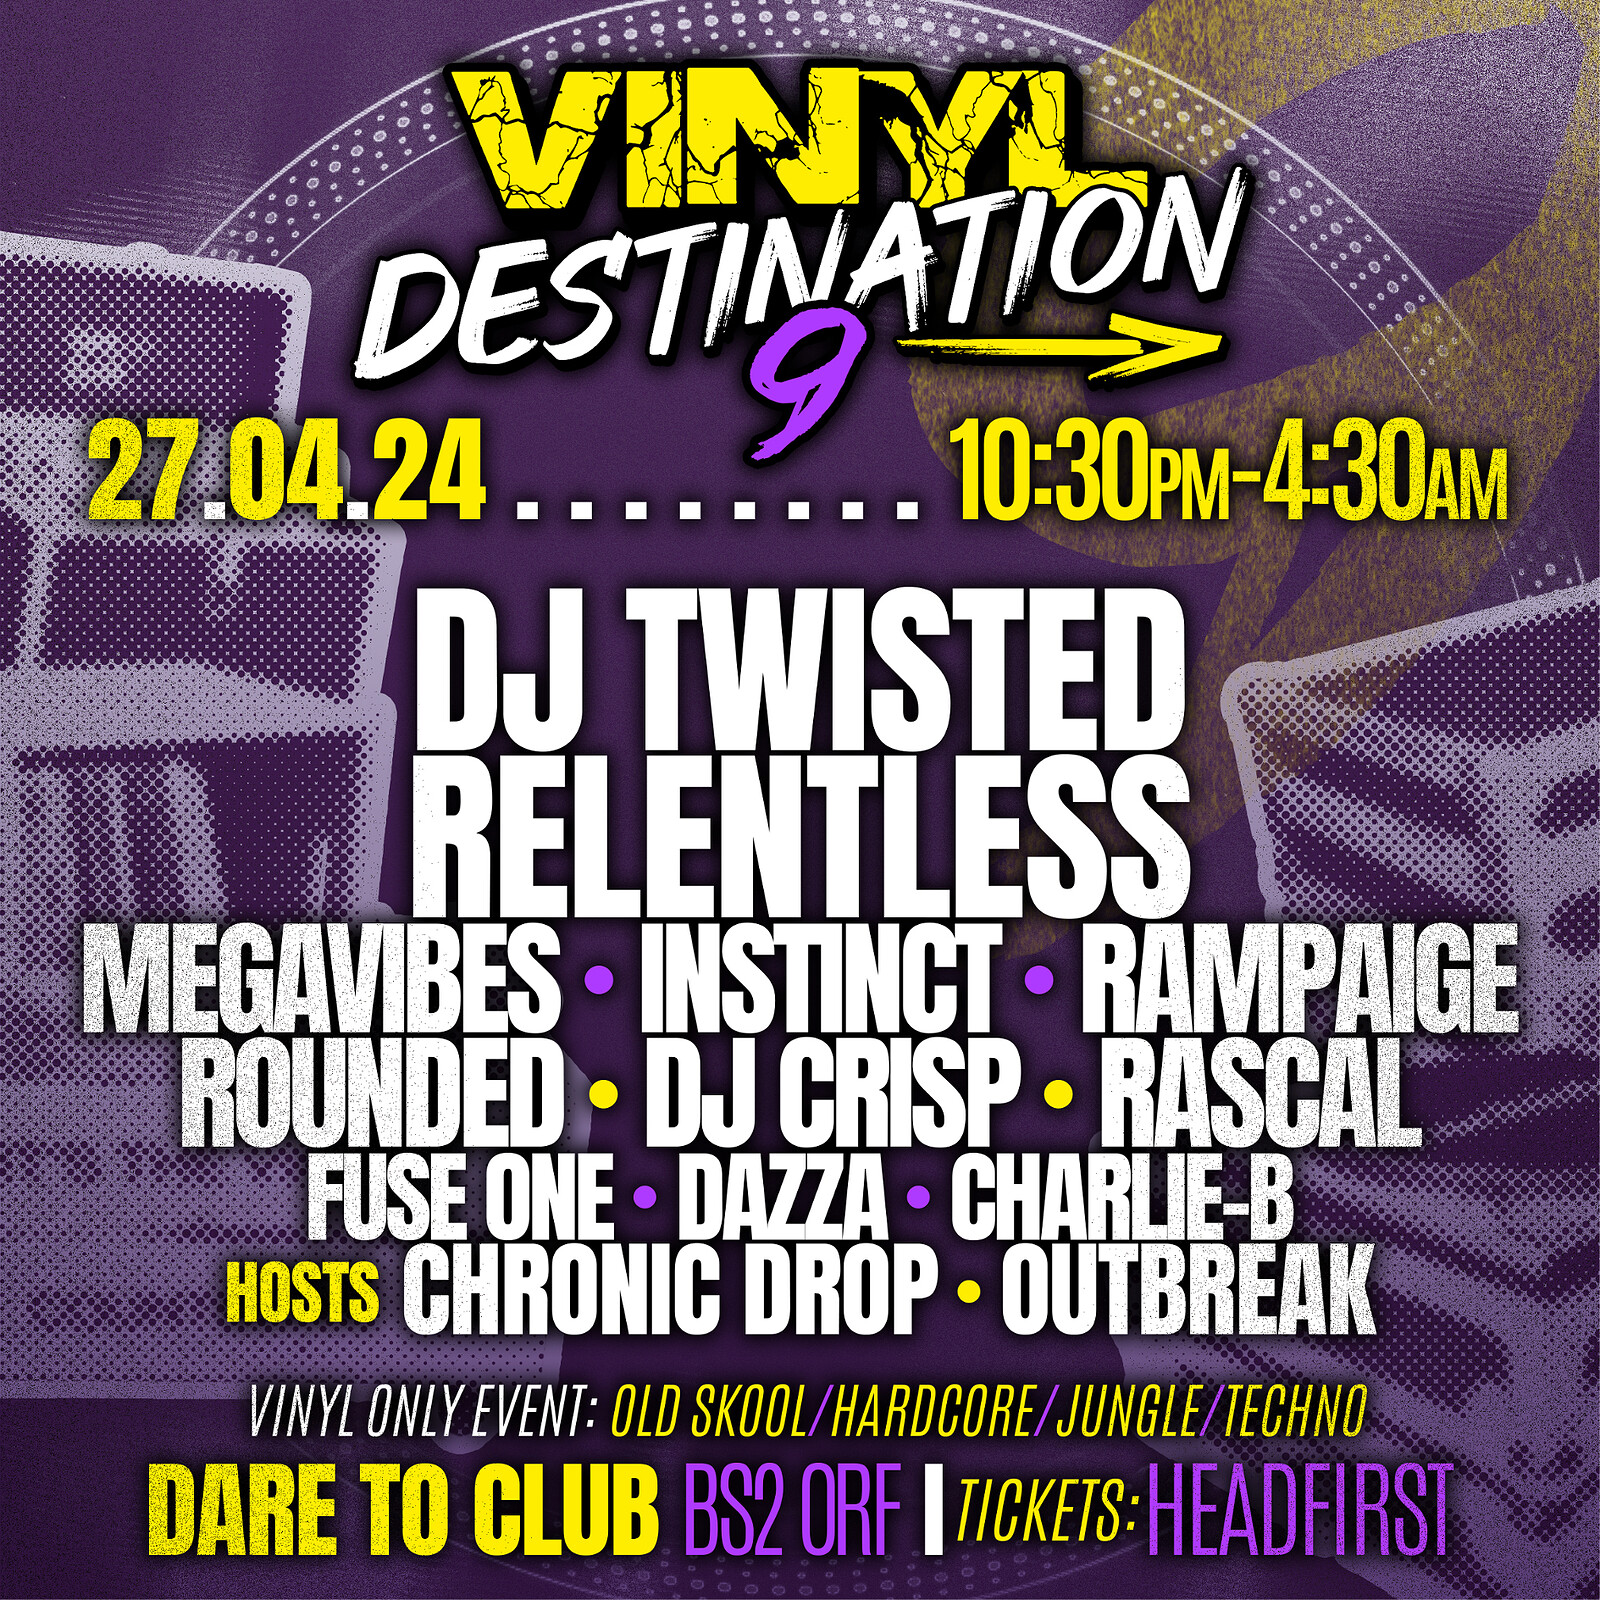 Vinyl Destination 9 - Spring Vibrations at Dare to Club